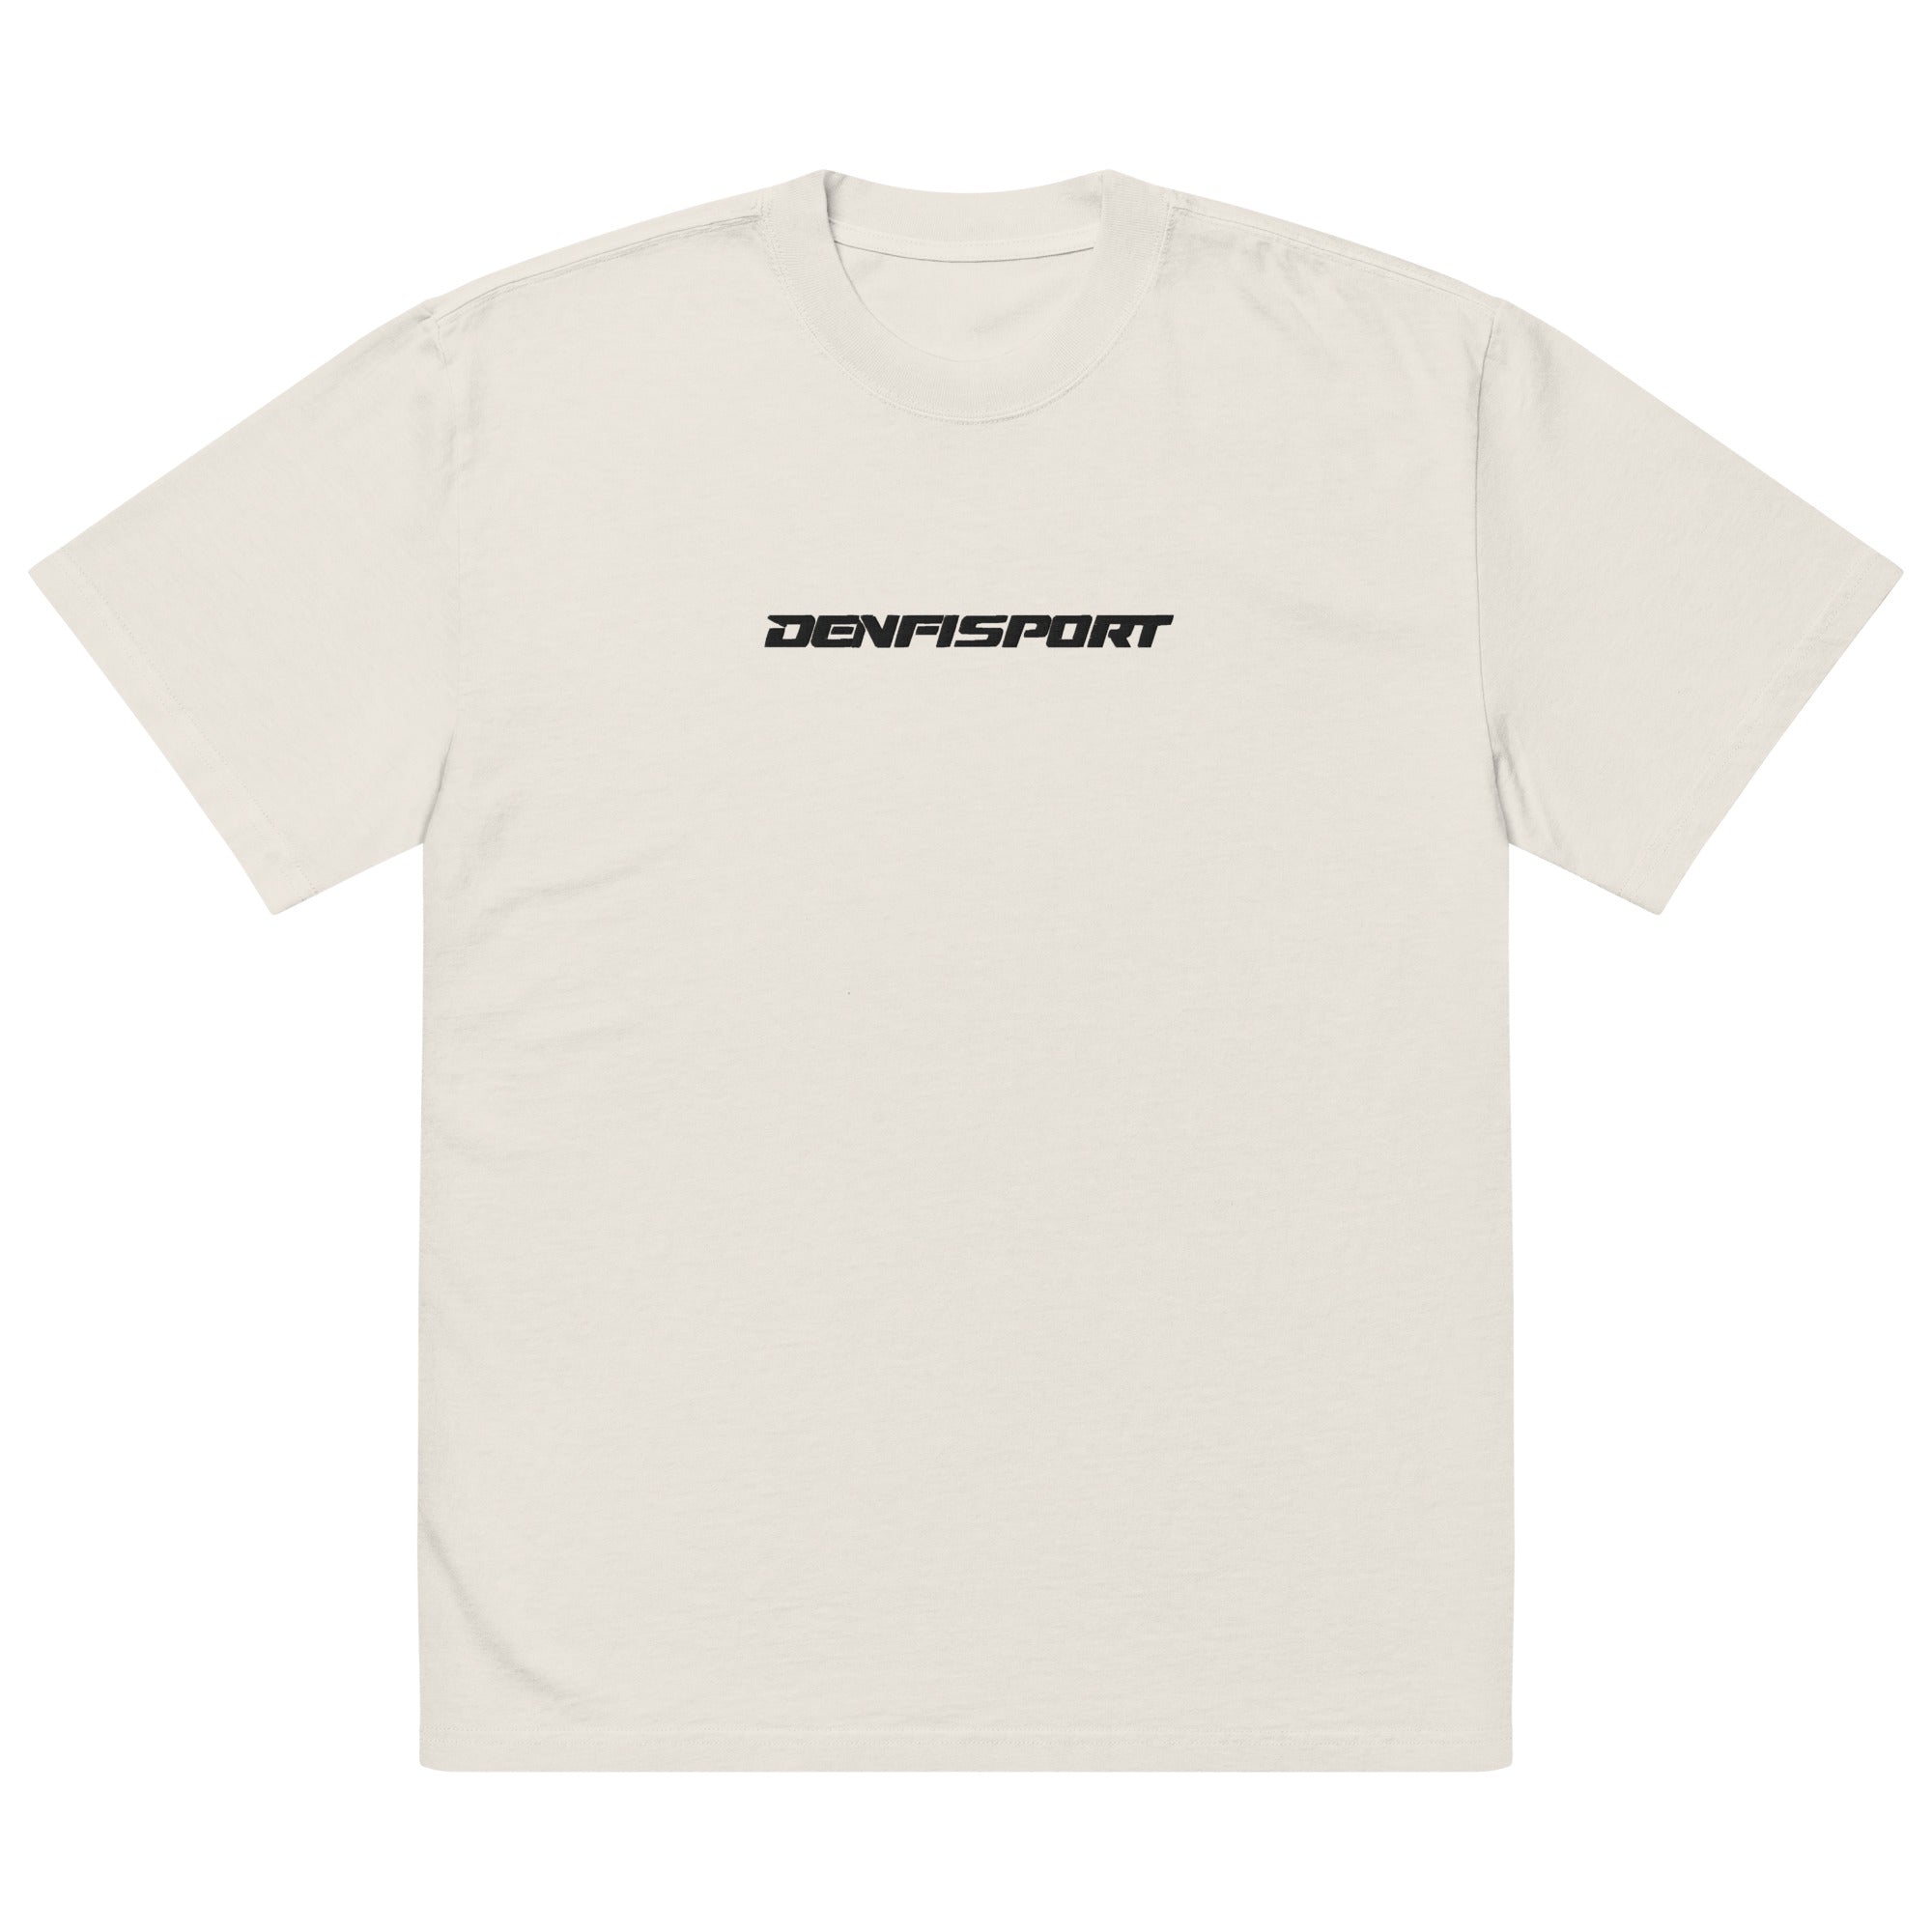 Denfi Sport Oversized faded t-shirt